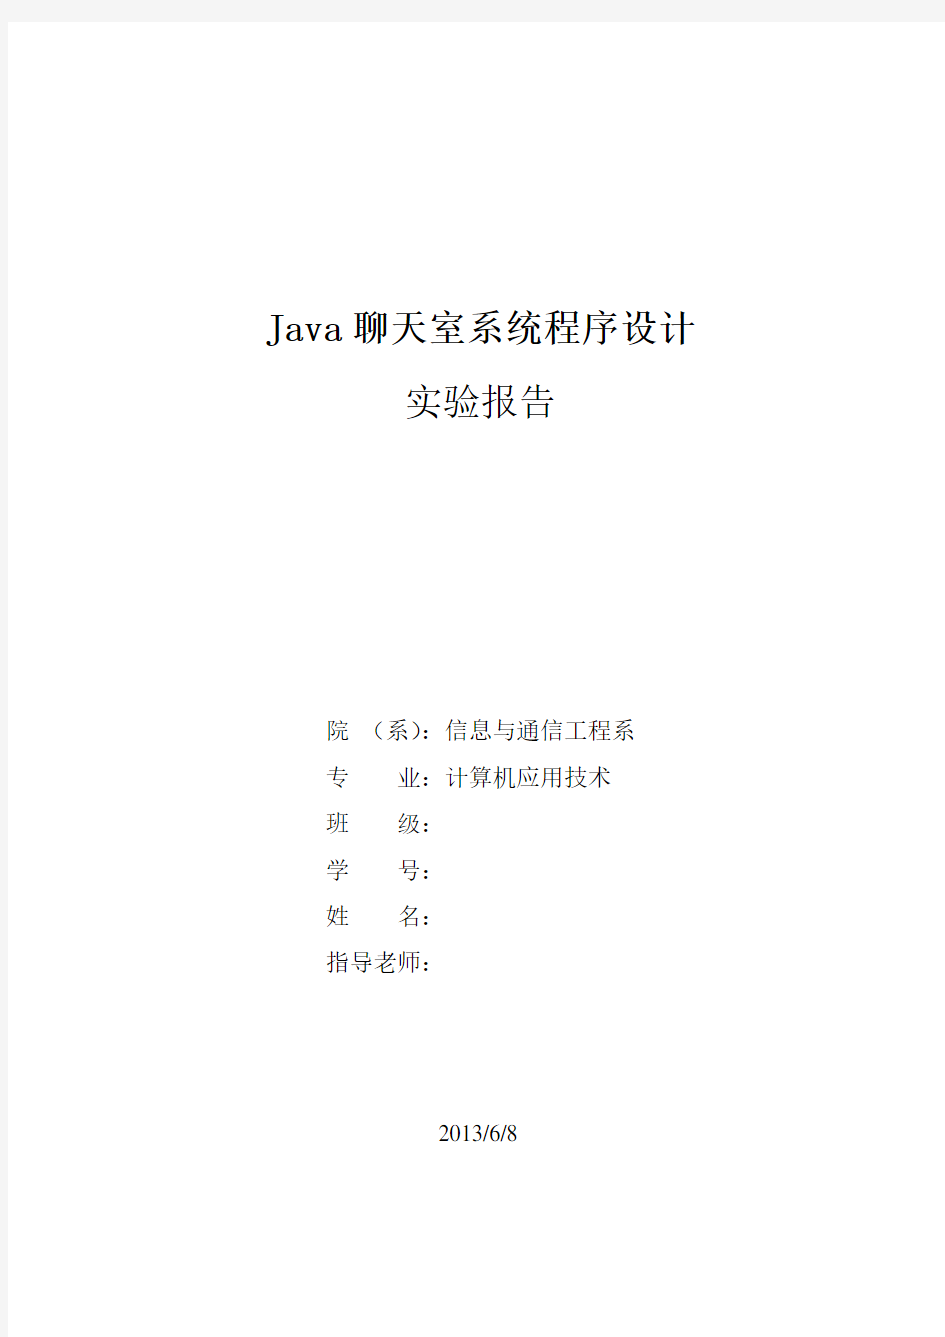 Java聊天室系统程序设计实验报告材料